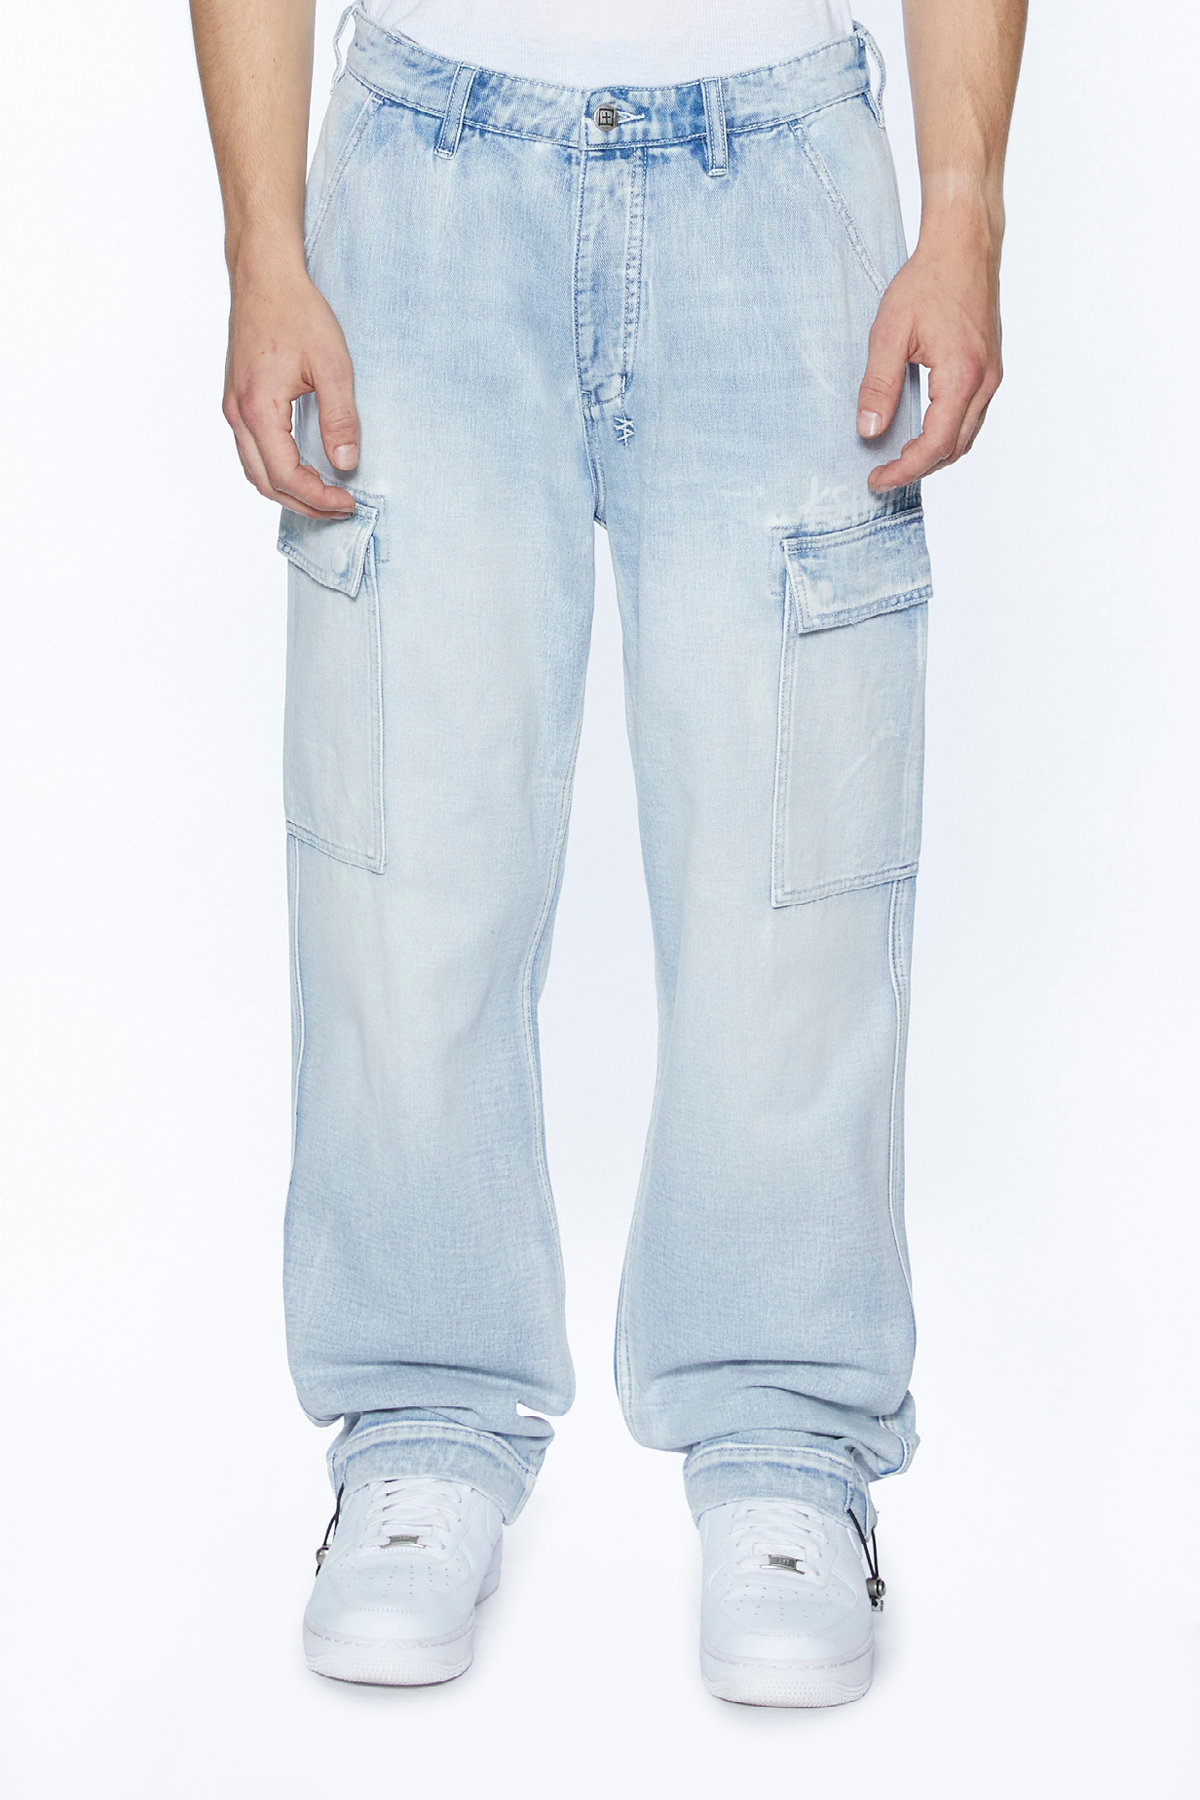 Ksubi Riot Cargo Pants Jeans - Denim